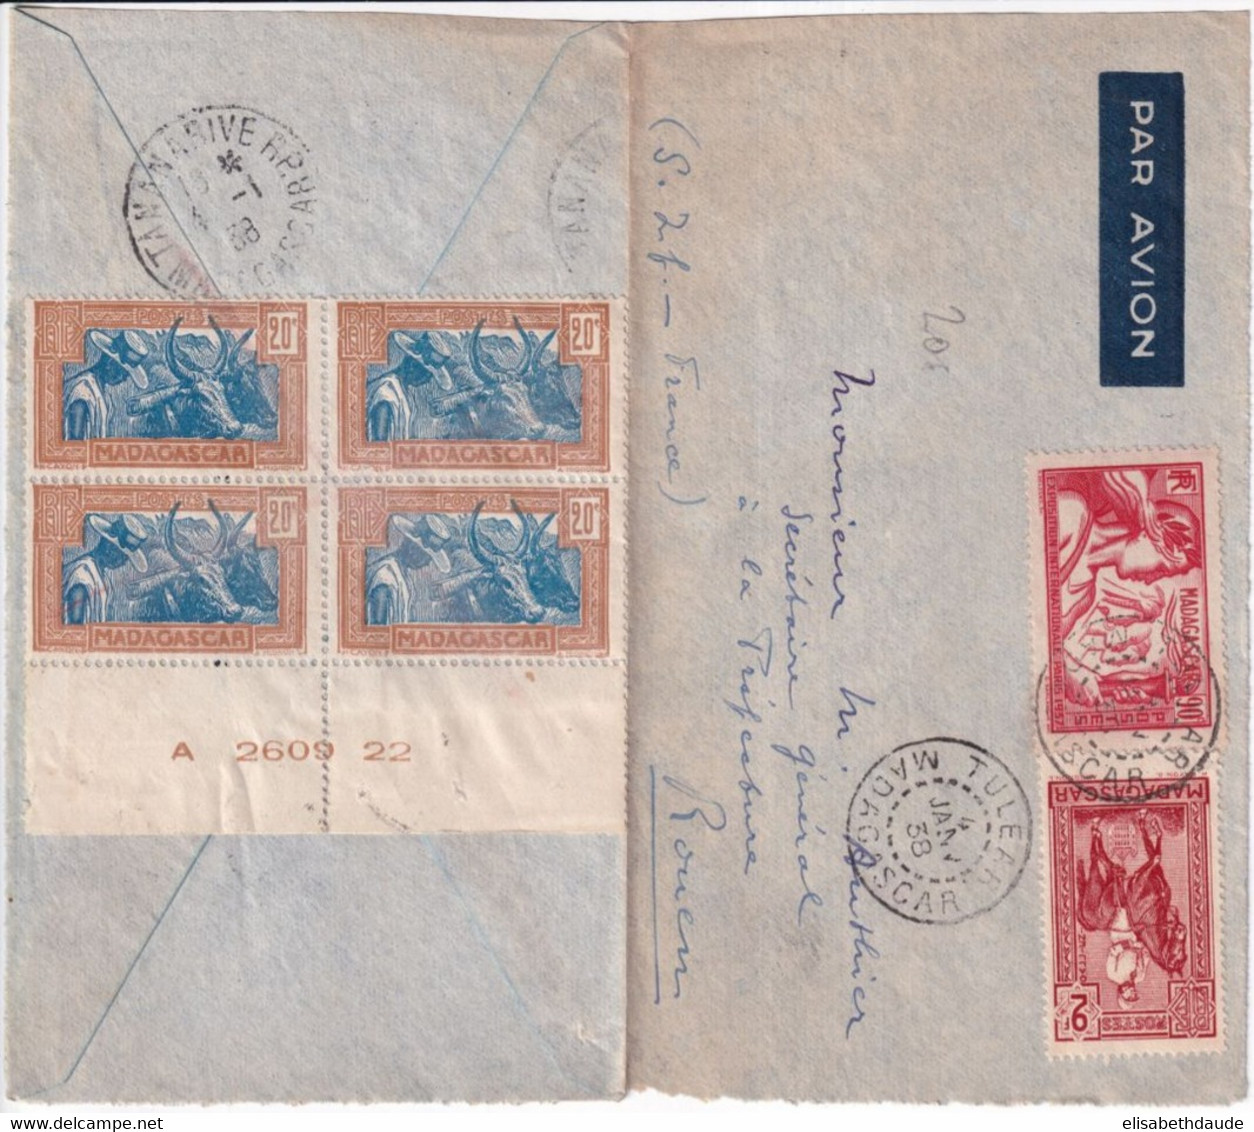 MADAGASCAR - 1938 - ENVELOPPE De TULEAR Par AVION Avec BLOC De 4 + EXPO 37 => ROUEN - Briefe U. Dokumente